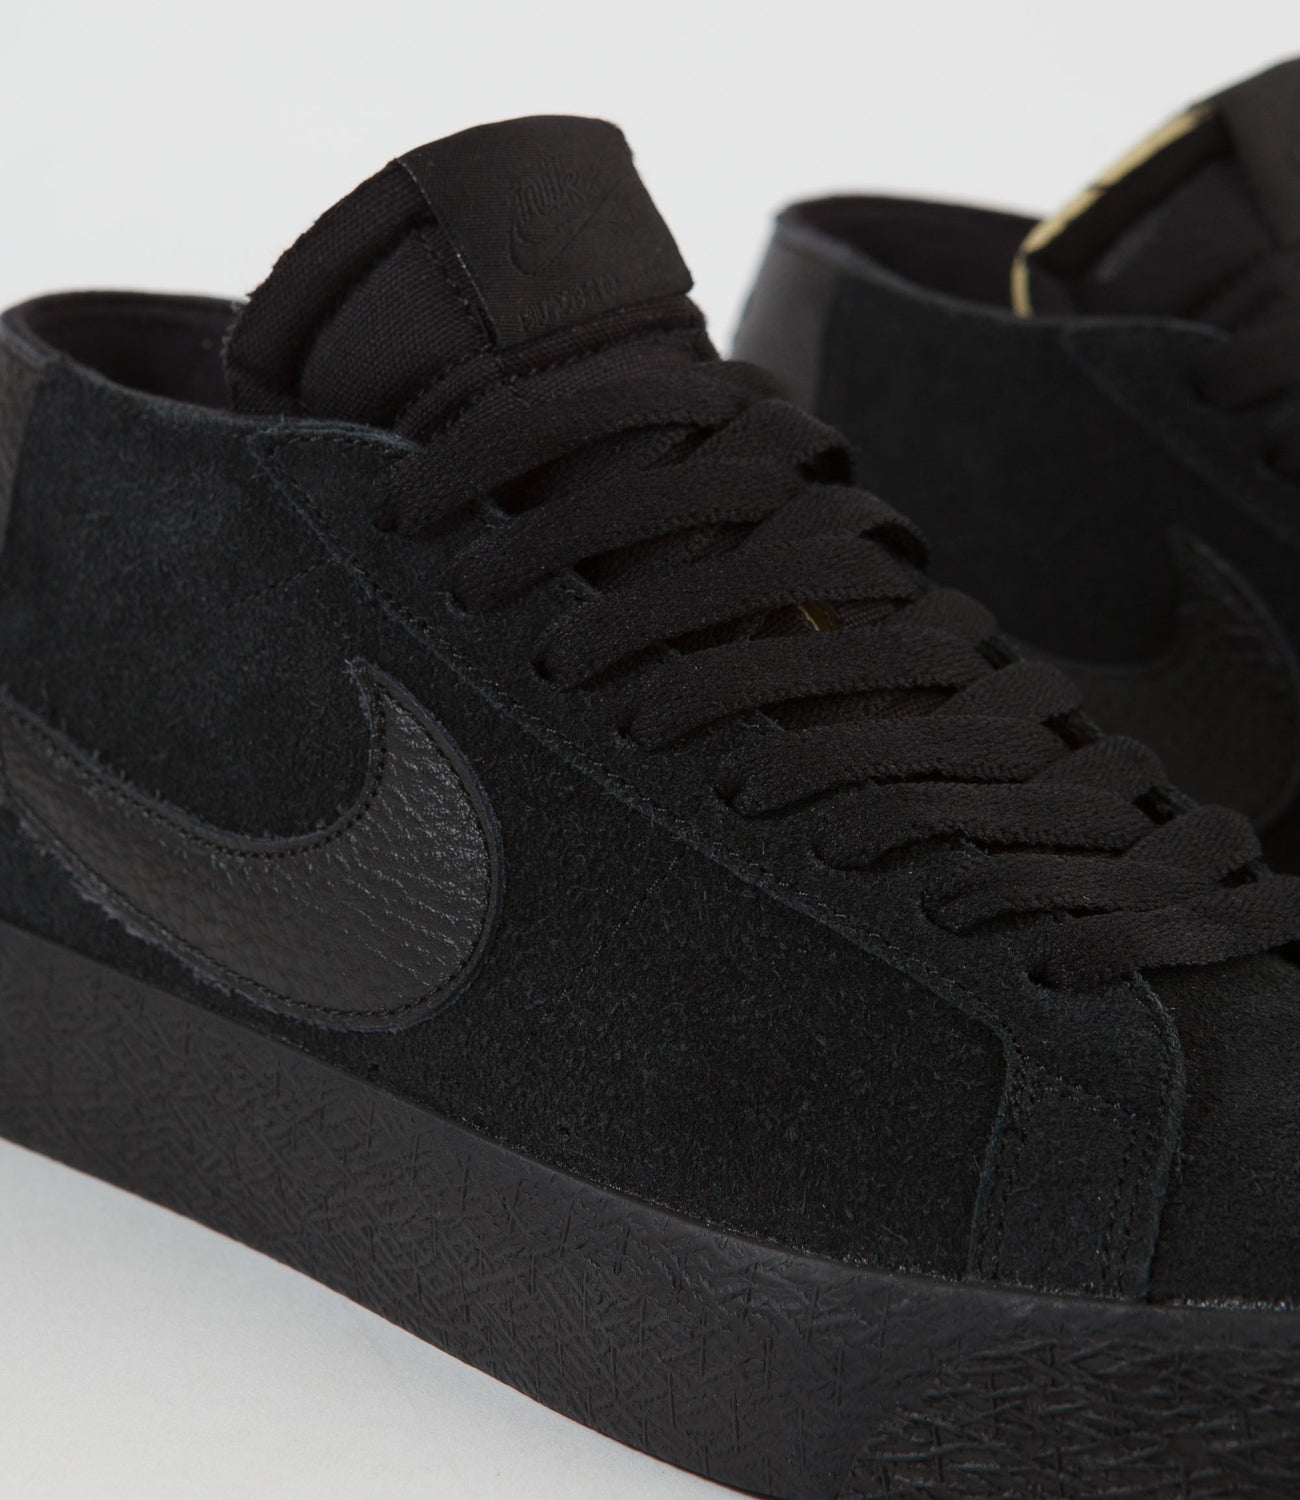 Nike SB Blazer Chukka Shoes - Black / Black | Flatspot